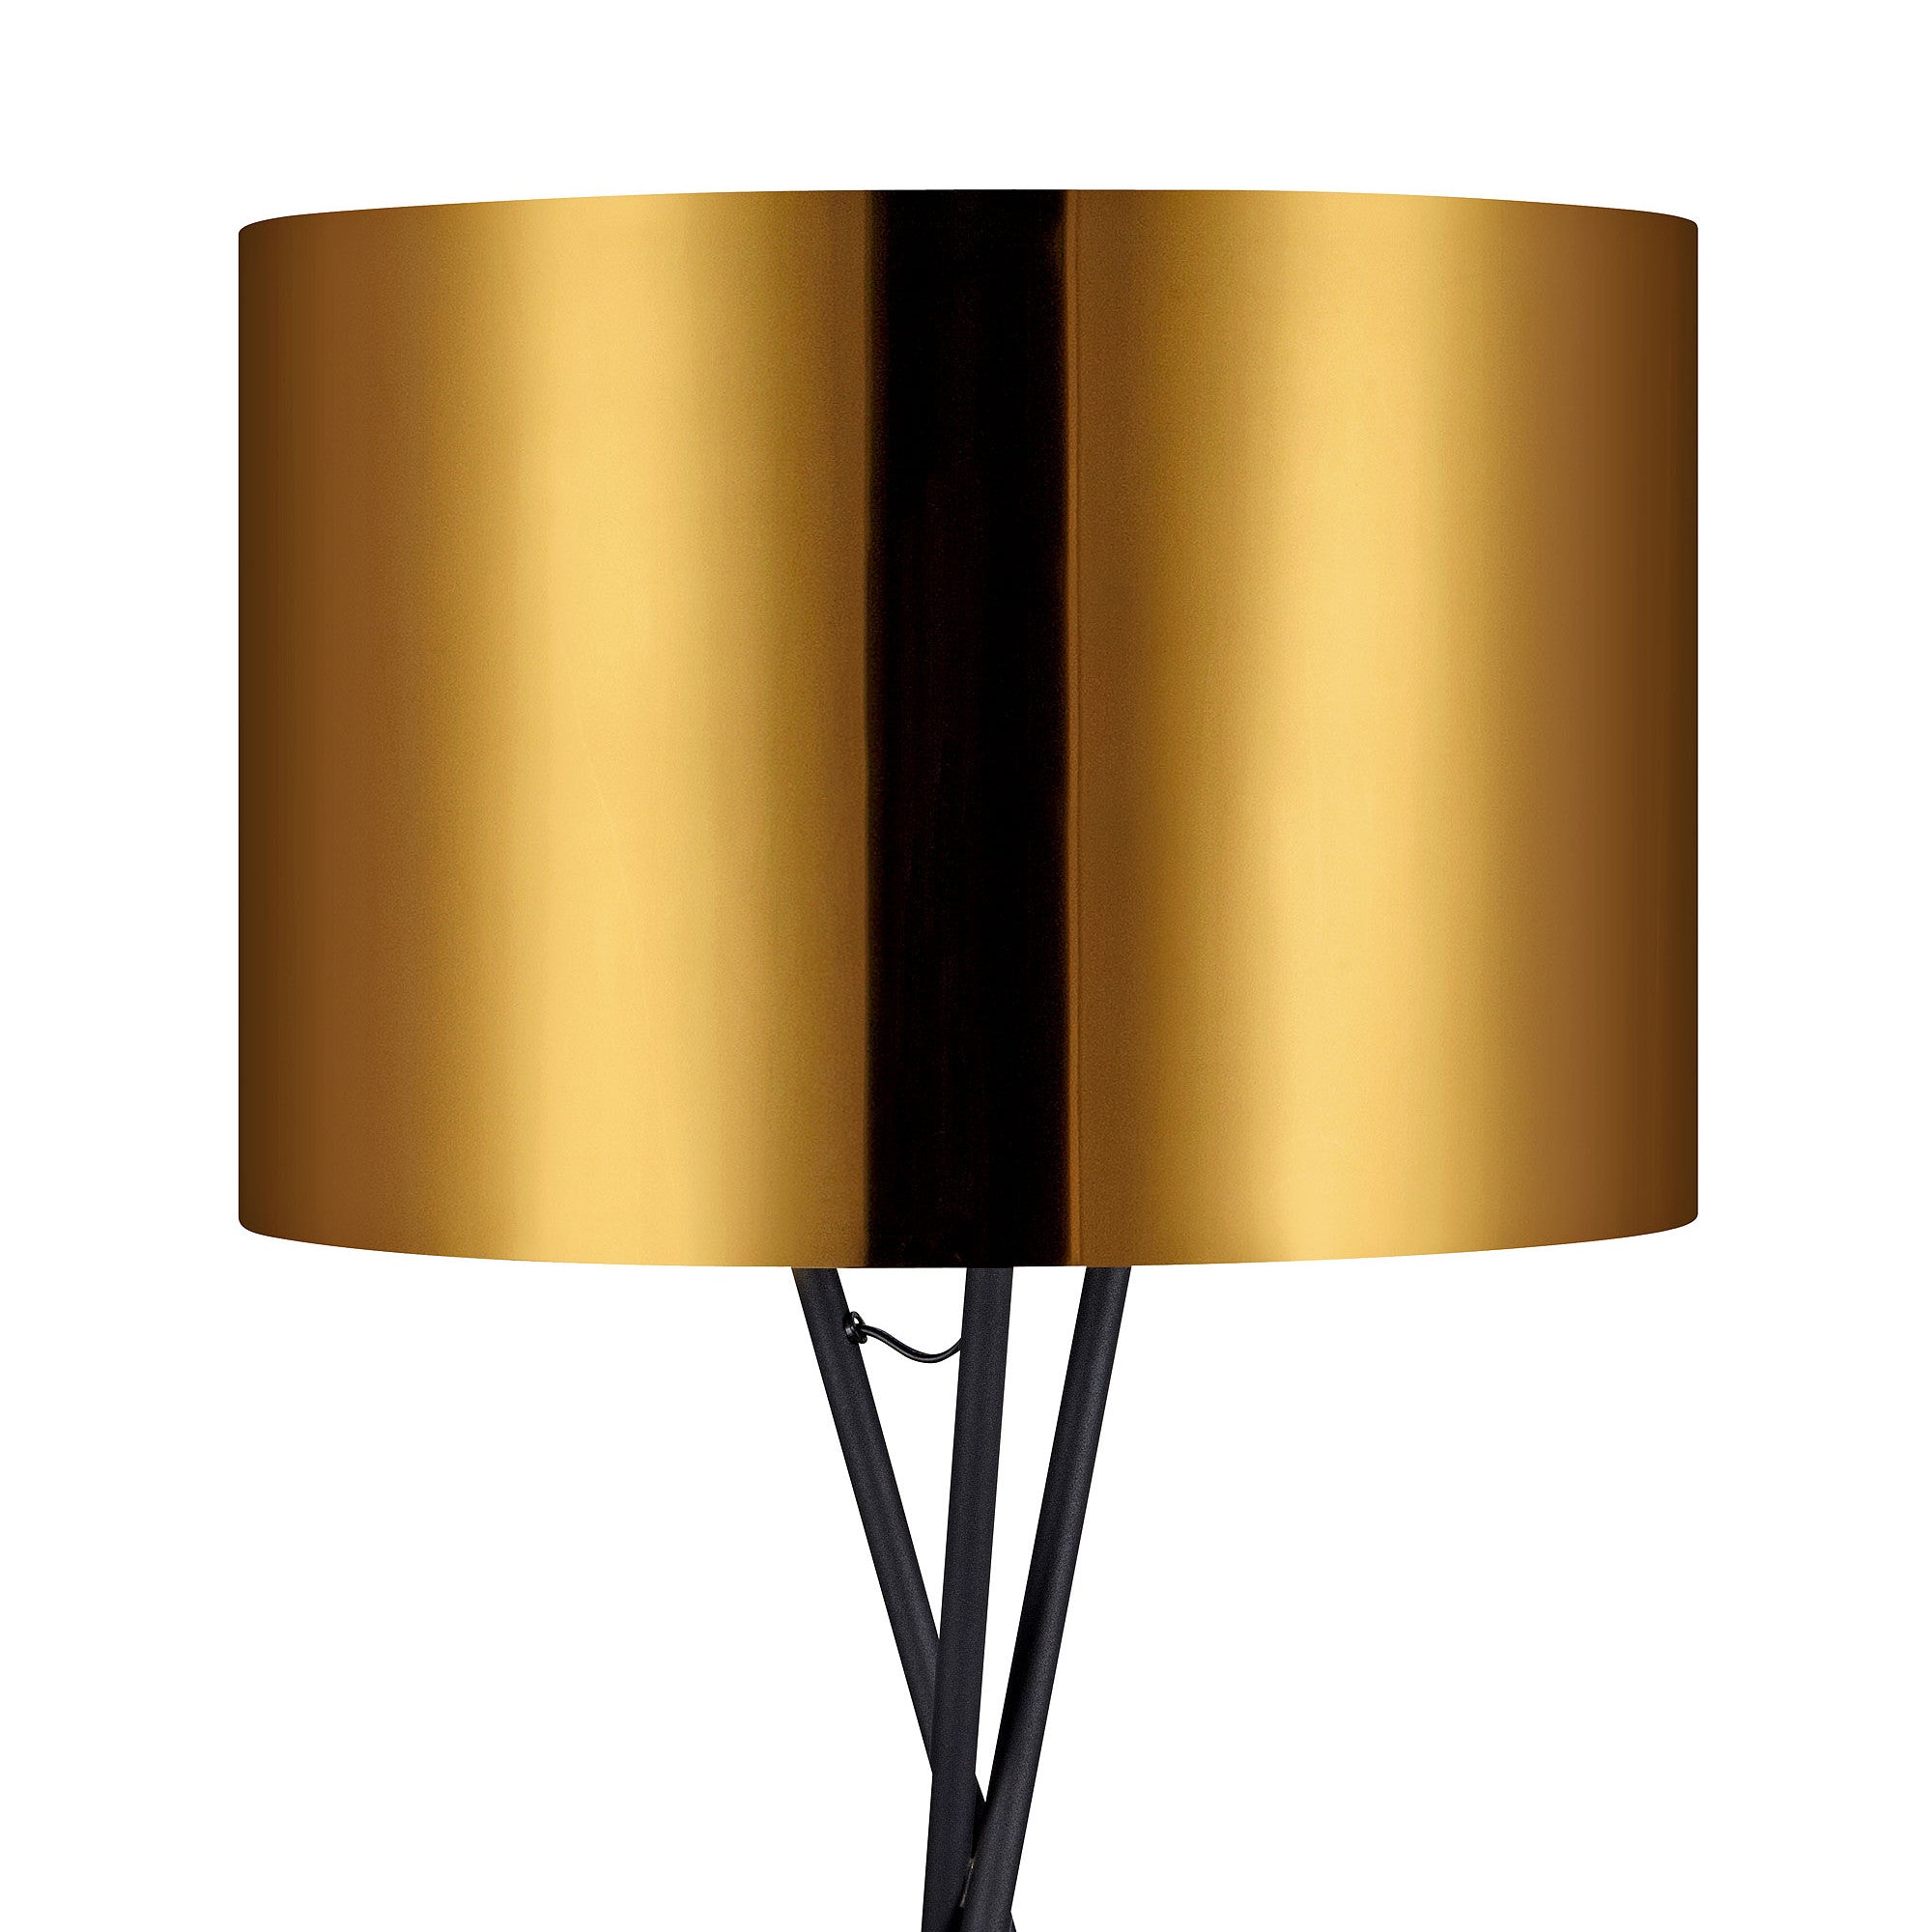 Teamson Home Cara 62" Modern Metal Tripod Floor Lamp with Drum Shade, Black/Gold